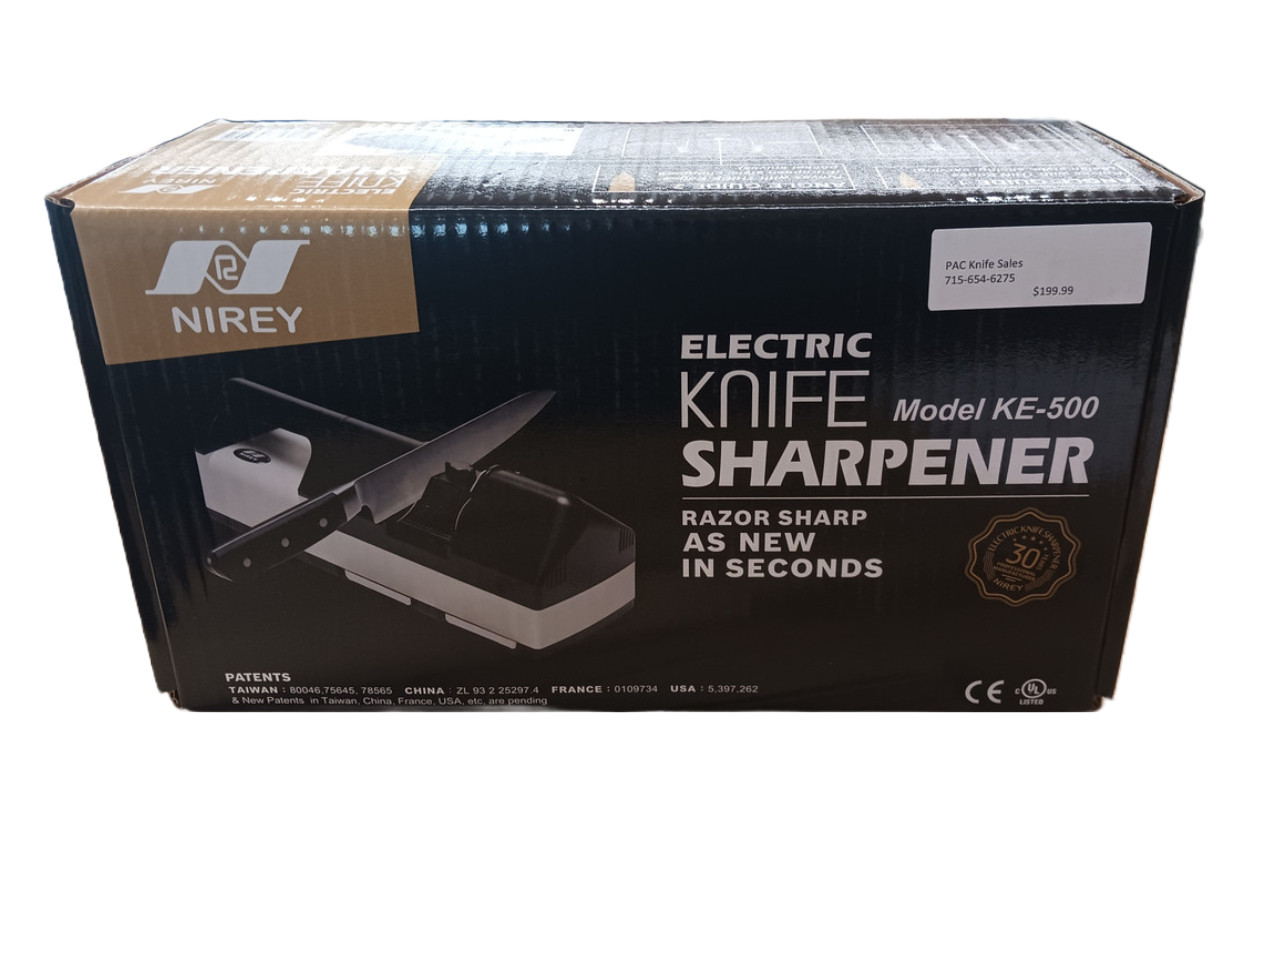 Electric Knife Sharpener - Nirey - Pac Knife Sales, LLC